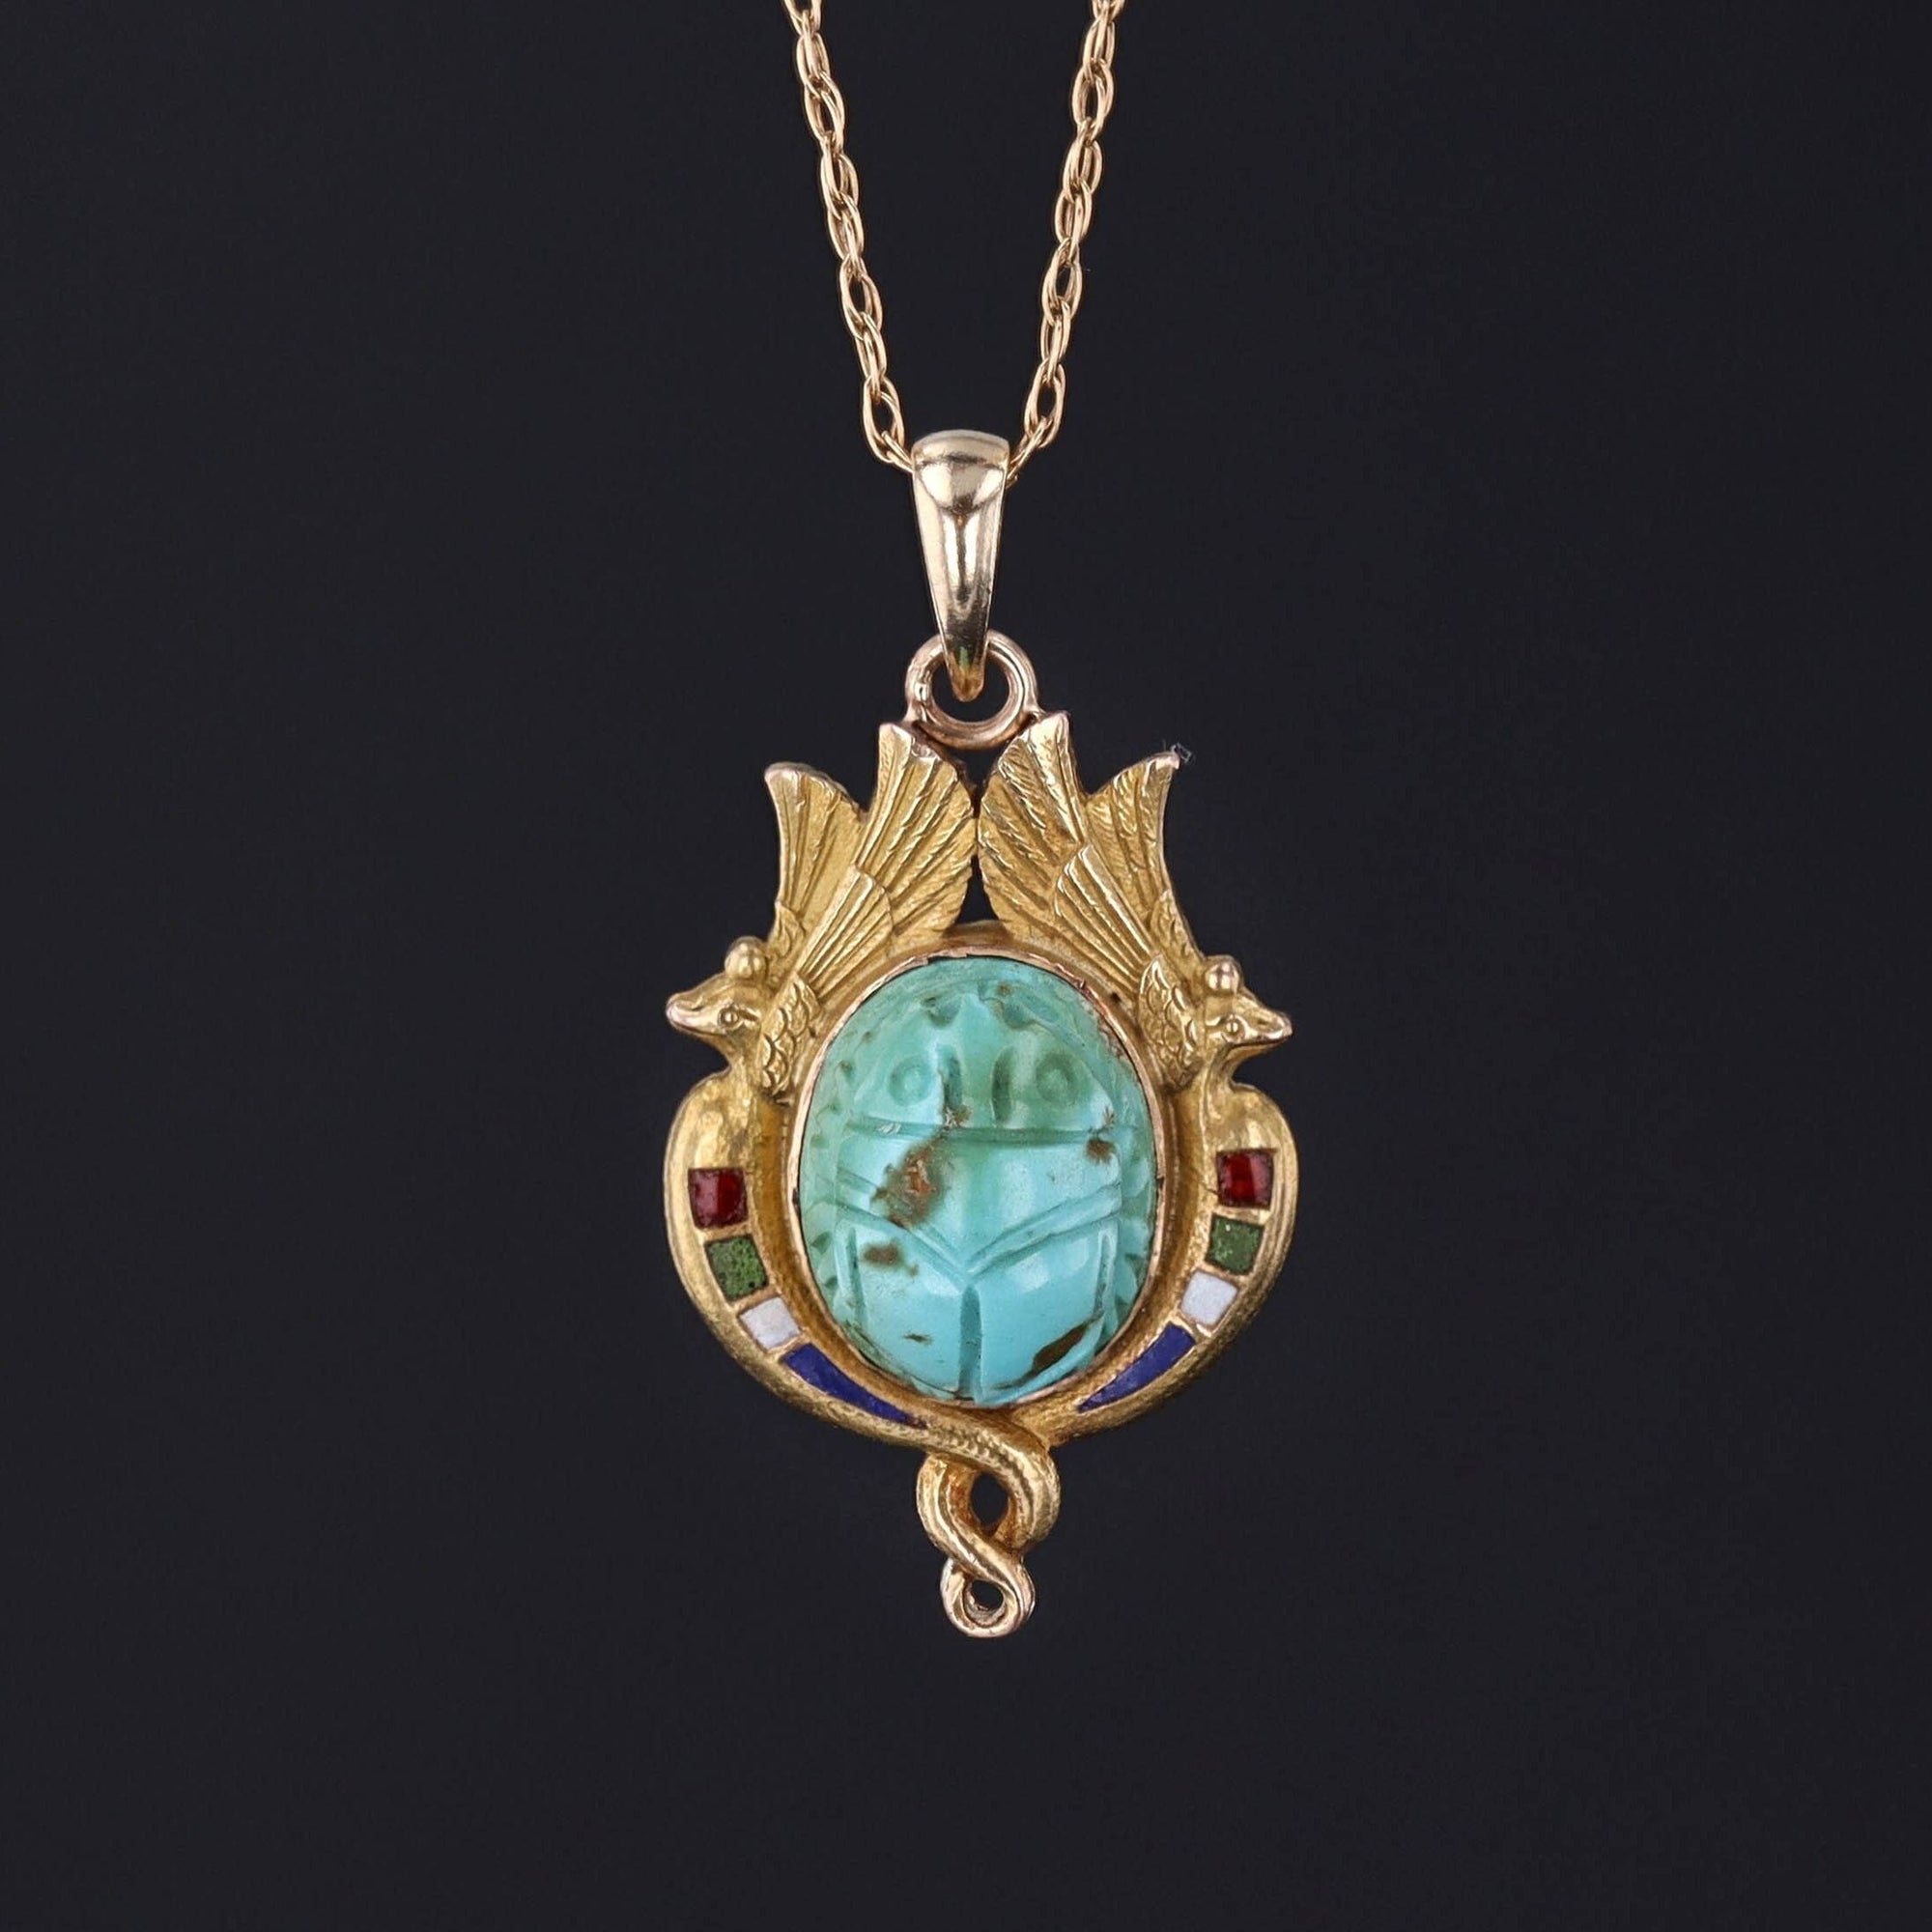 Egyptian Revival Pendant | Antique Gold & Turquoise Pendant 